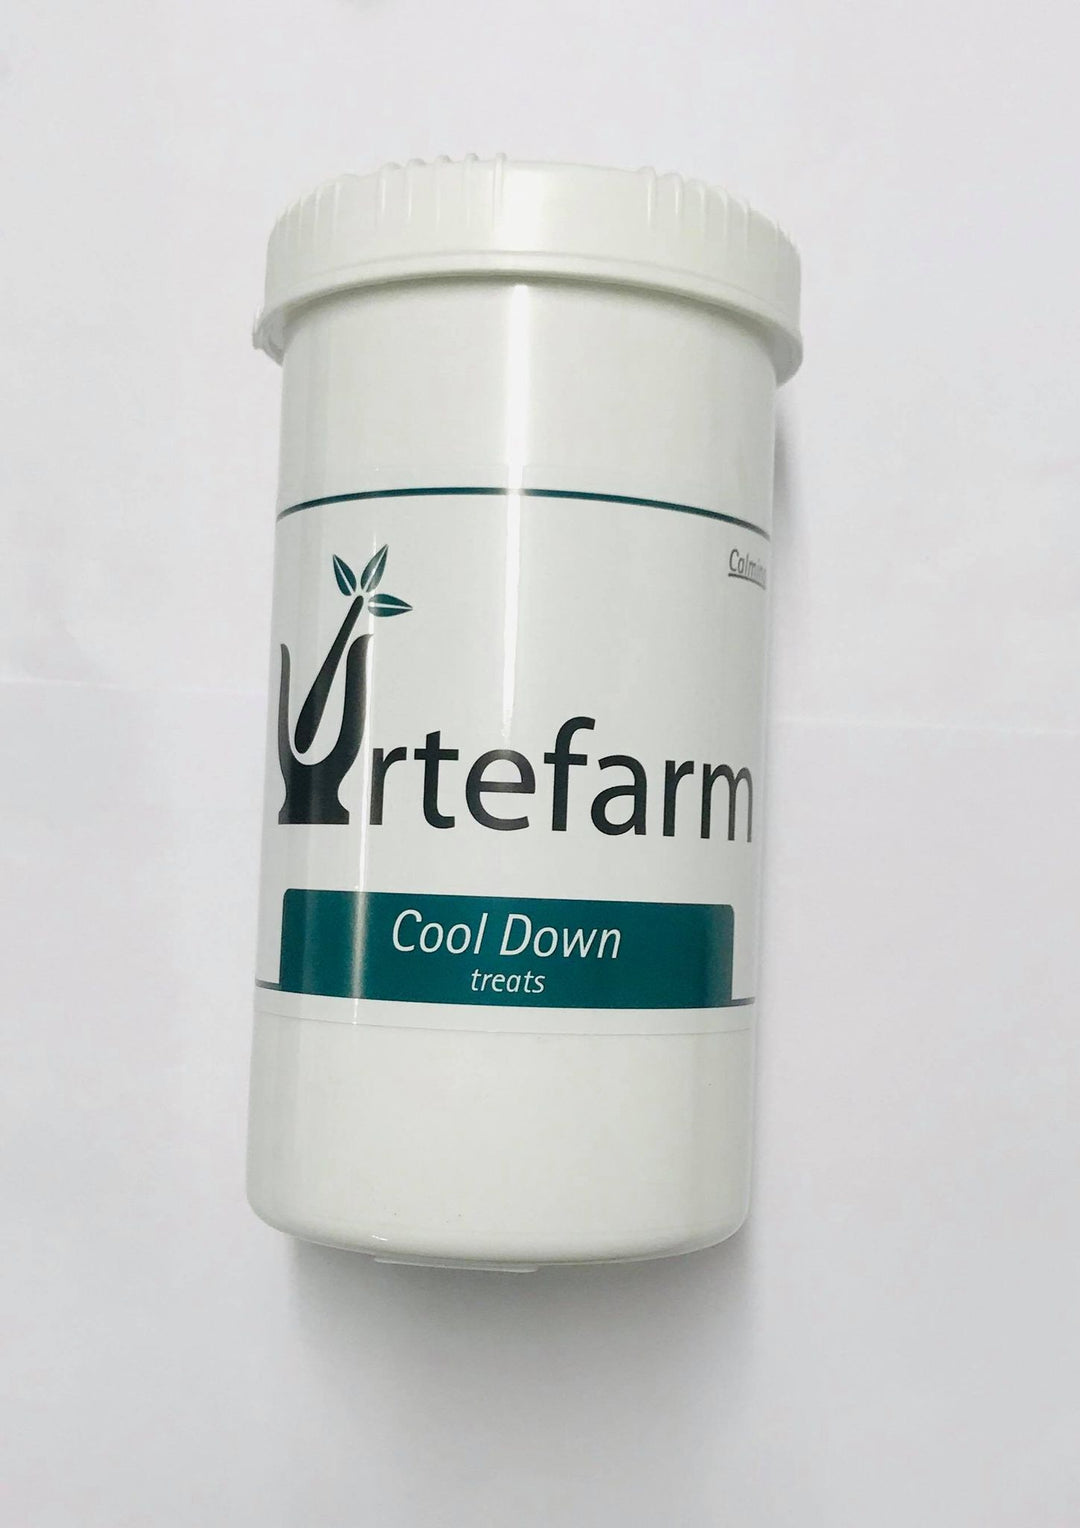 Urtefarm Cool Down Treats